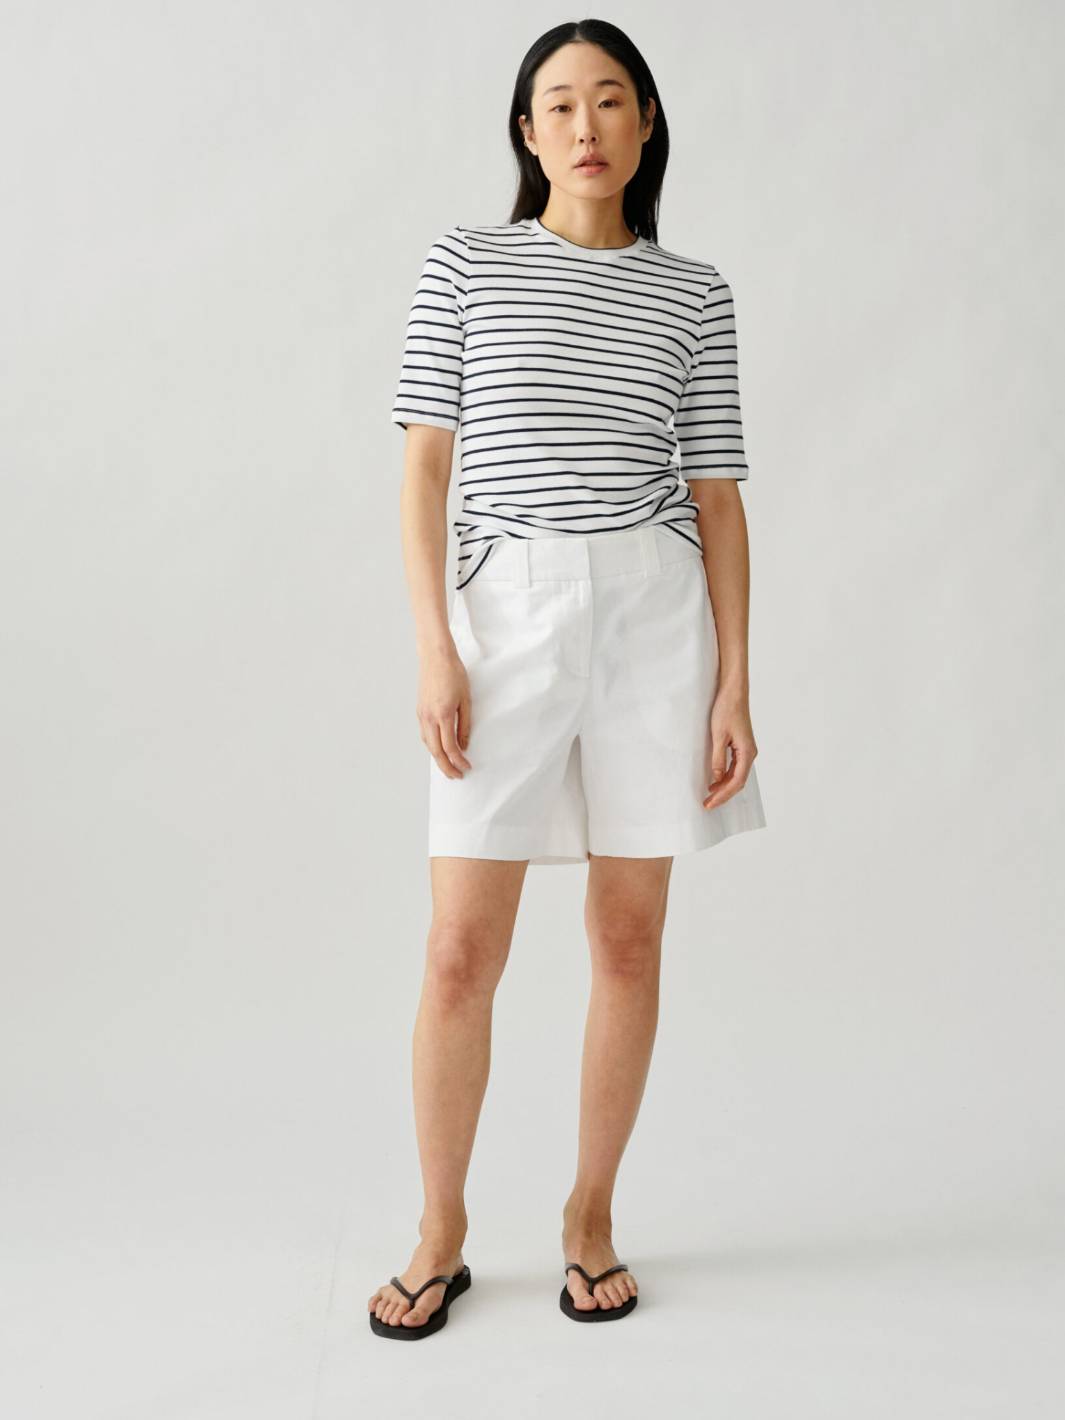 Julie Josephine Shorts Skjorts | Lily White Shorts